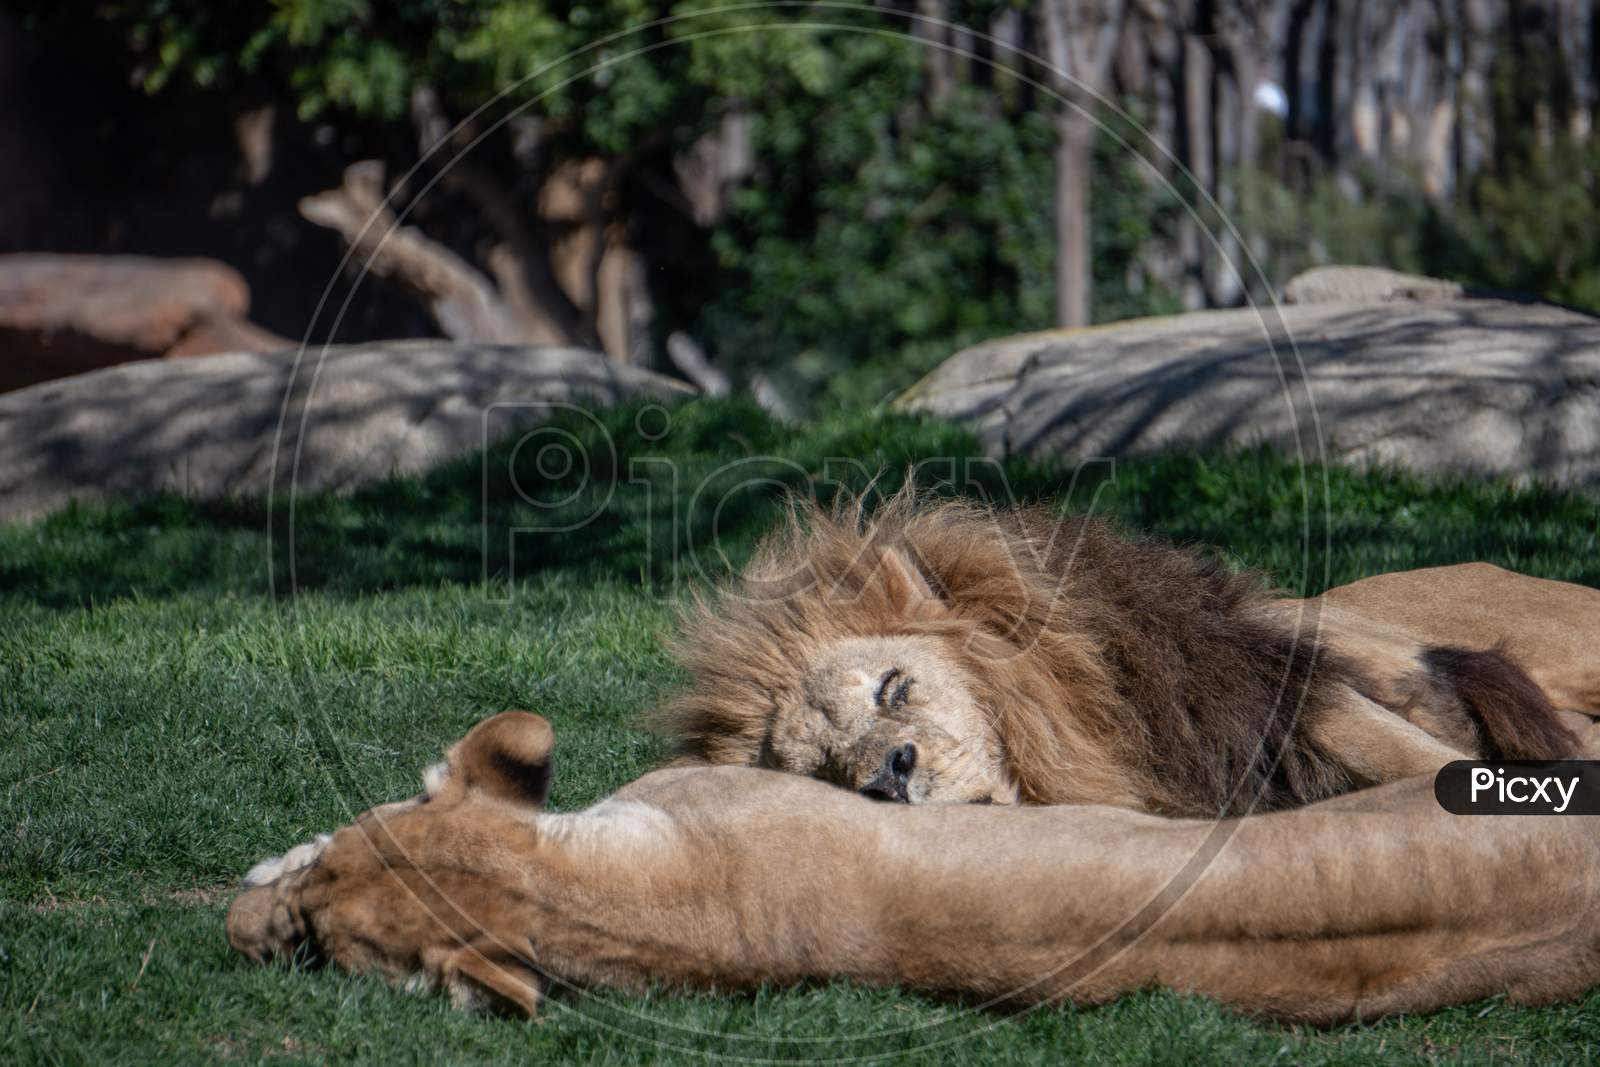 Valencia, Spain - February 26 : African Lions Sleeping At The Bioparc In Valencia Spain On February 26, 2019